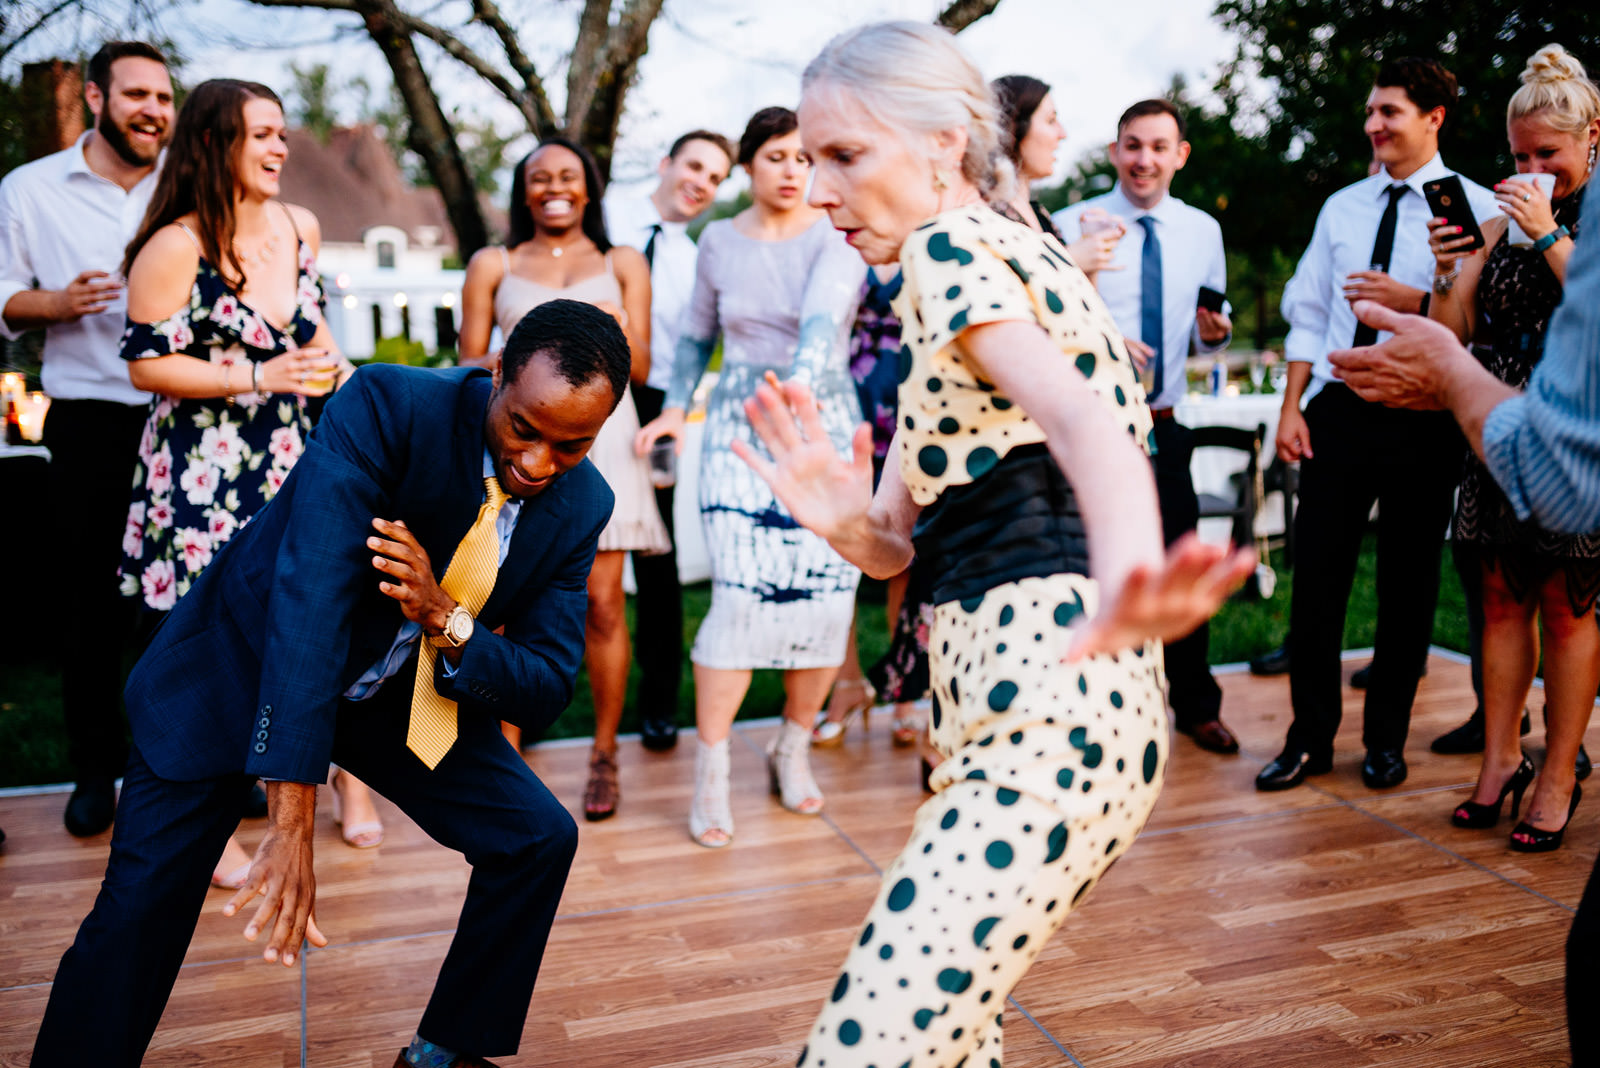 guests dancing during outdoor wedding reception